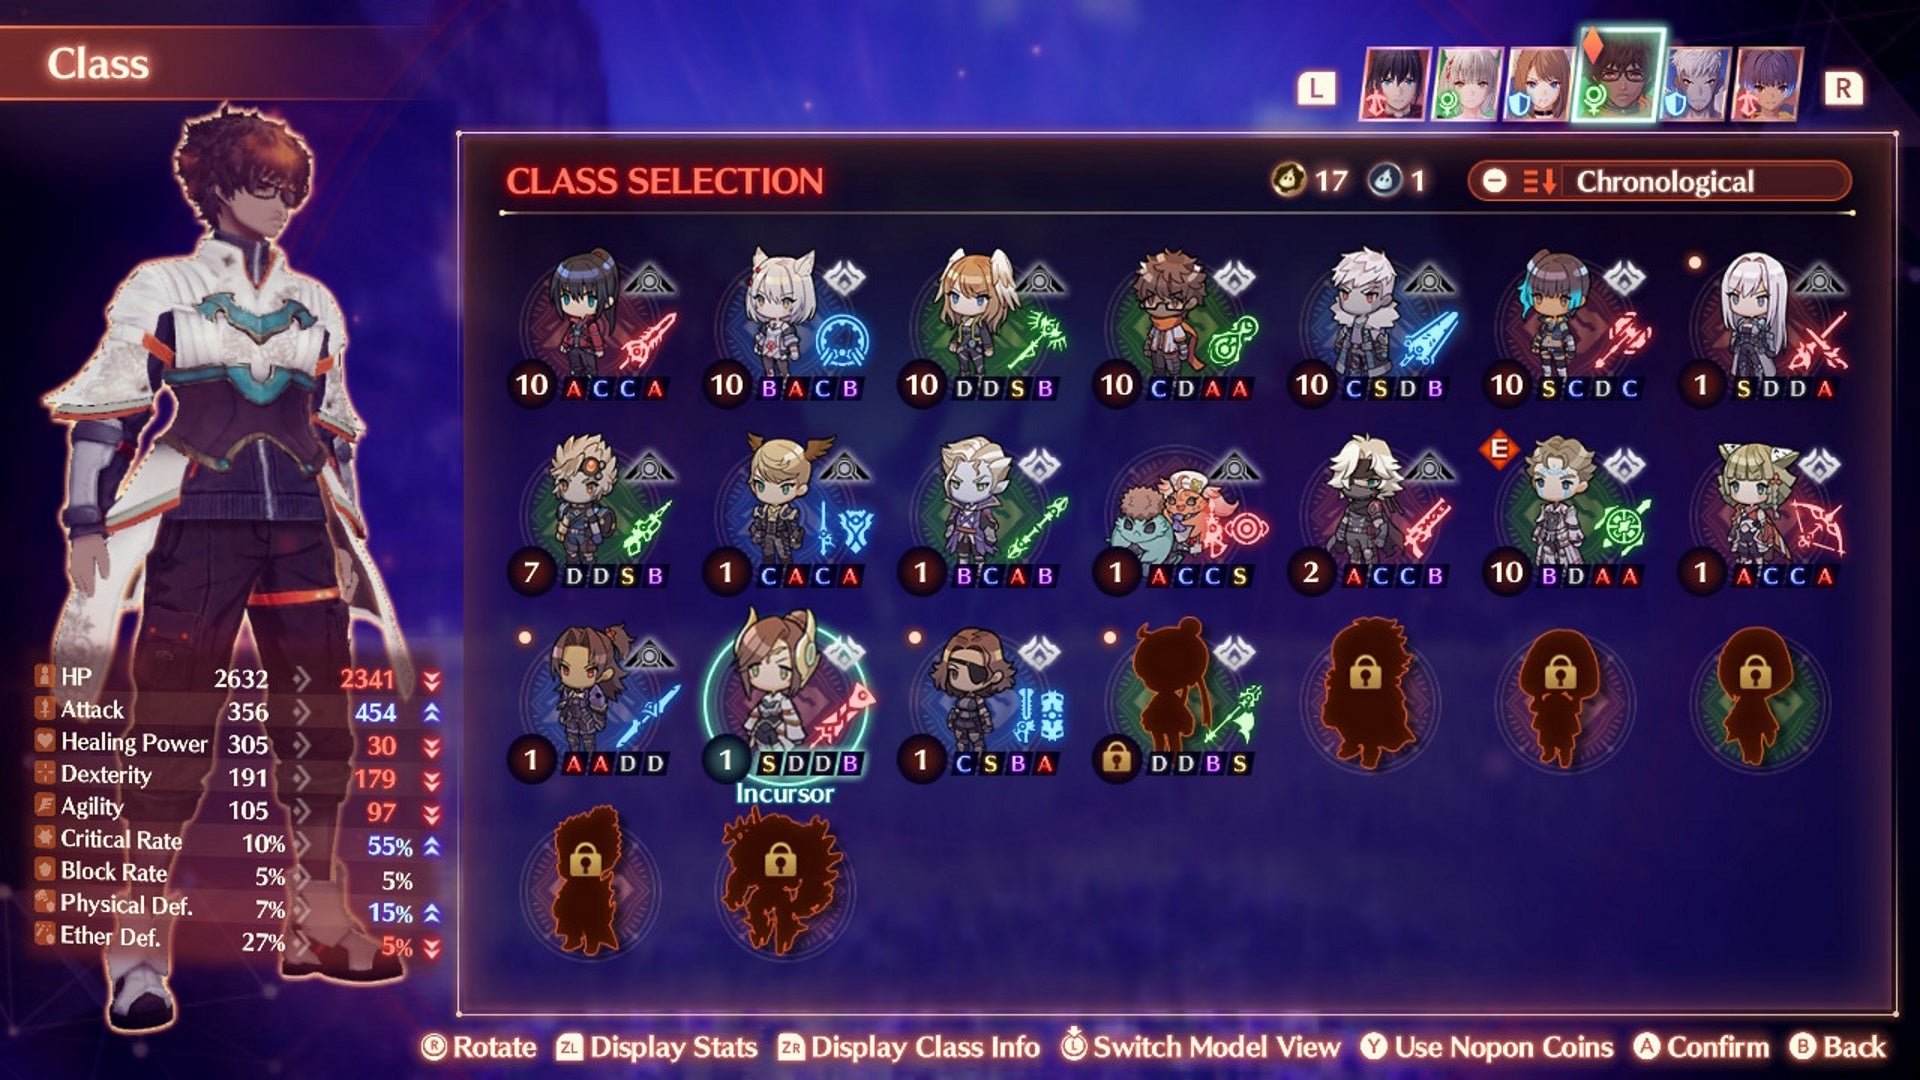 Xenoblade Chronicles 3 arts: The Incursor class on the class selection screen